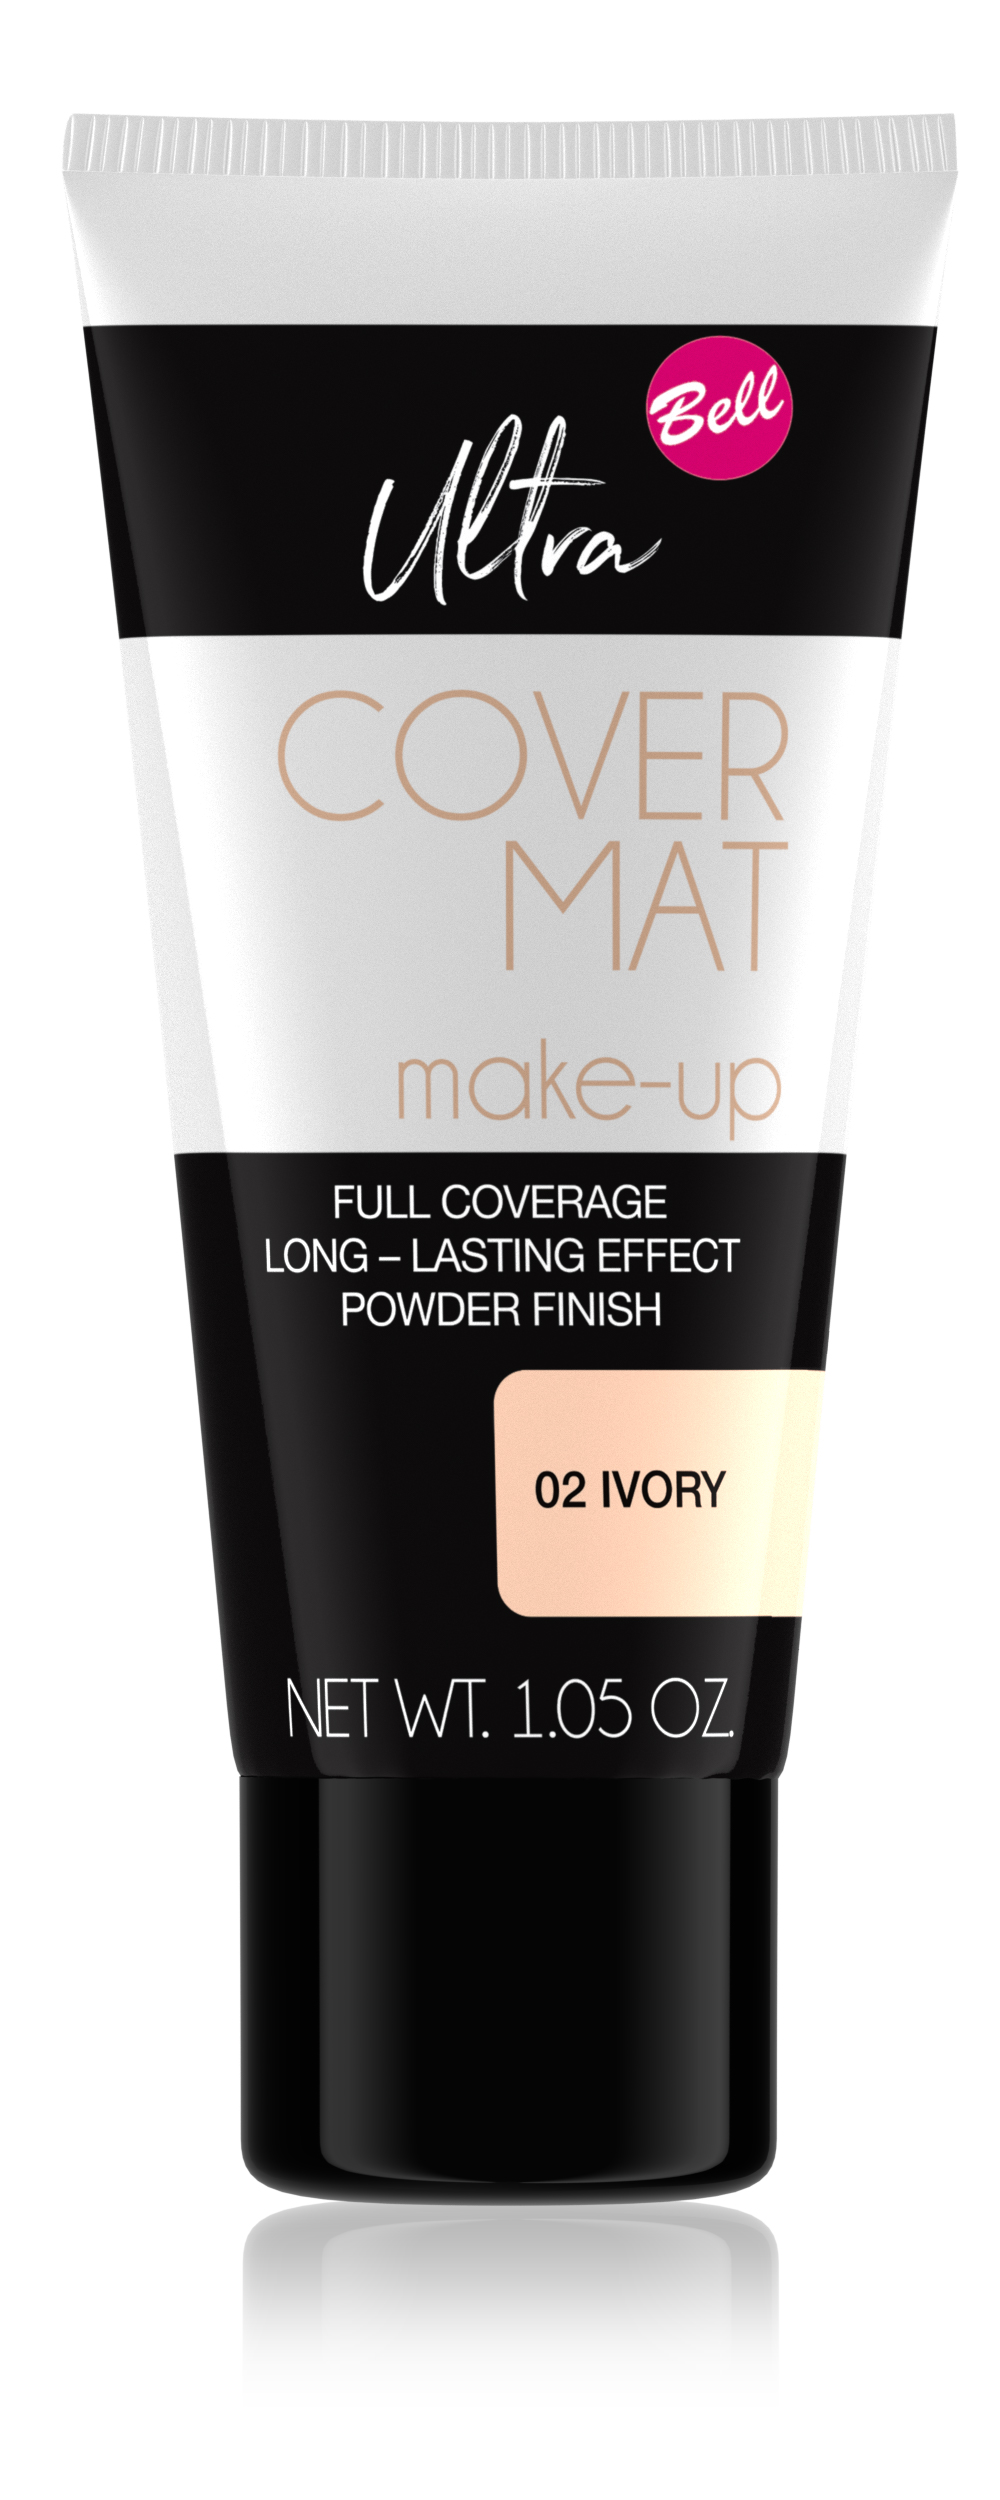 Ultra Cover Mat Make-Up